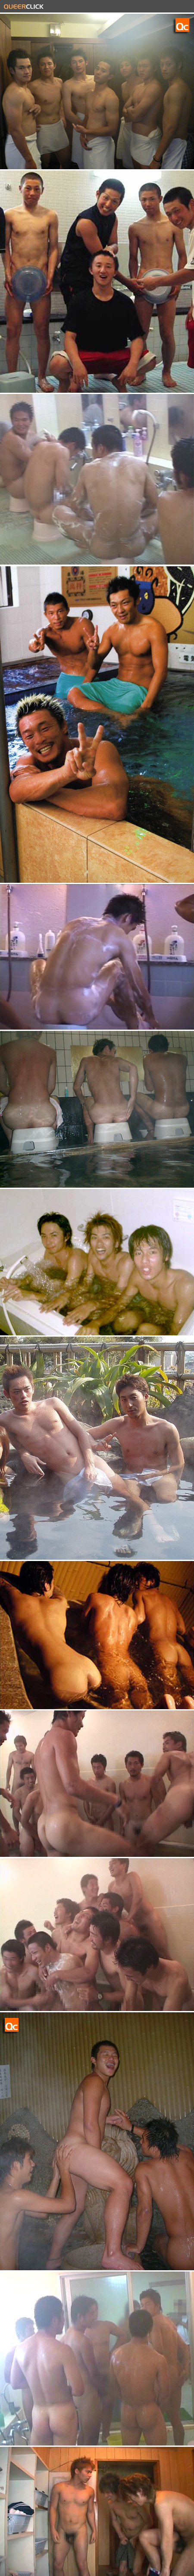 hot_bath_in_japan.jpg